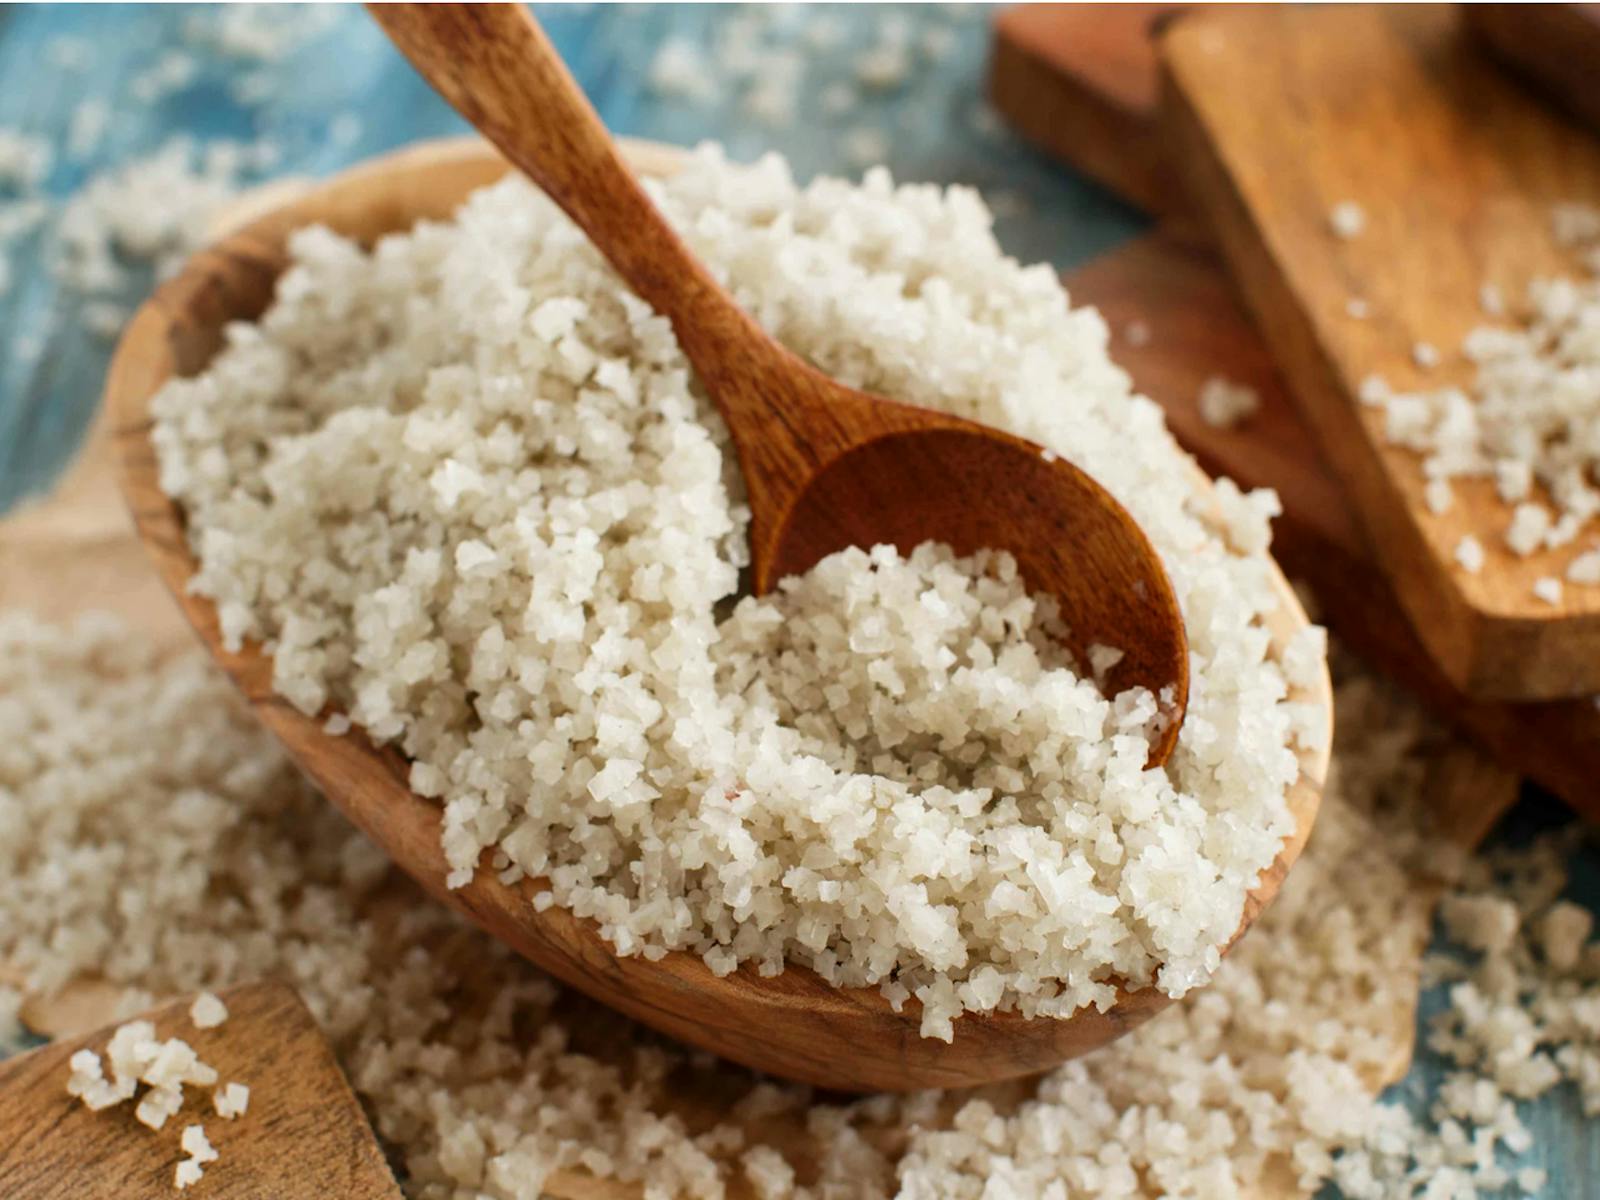 Celtic Salt Benefits: Uncovering Unique Health Advantages in Research -  PharmEasy Blog